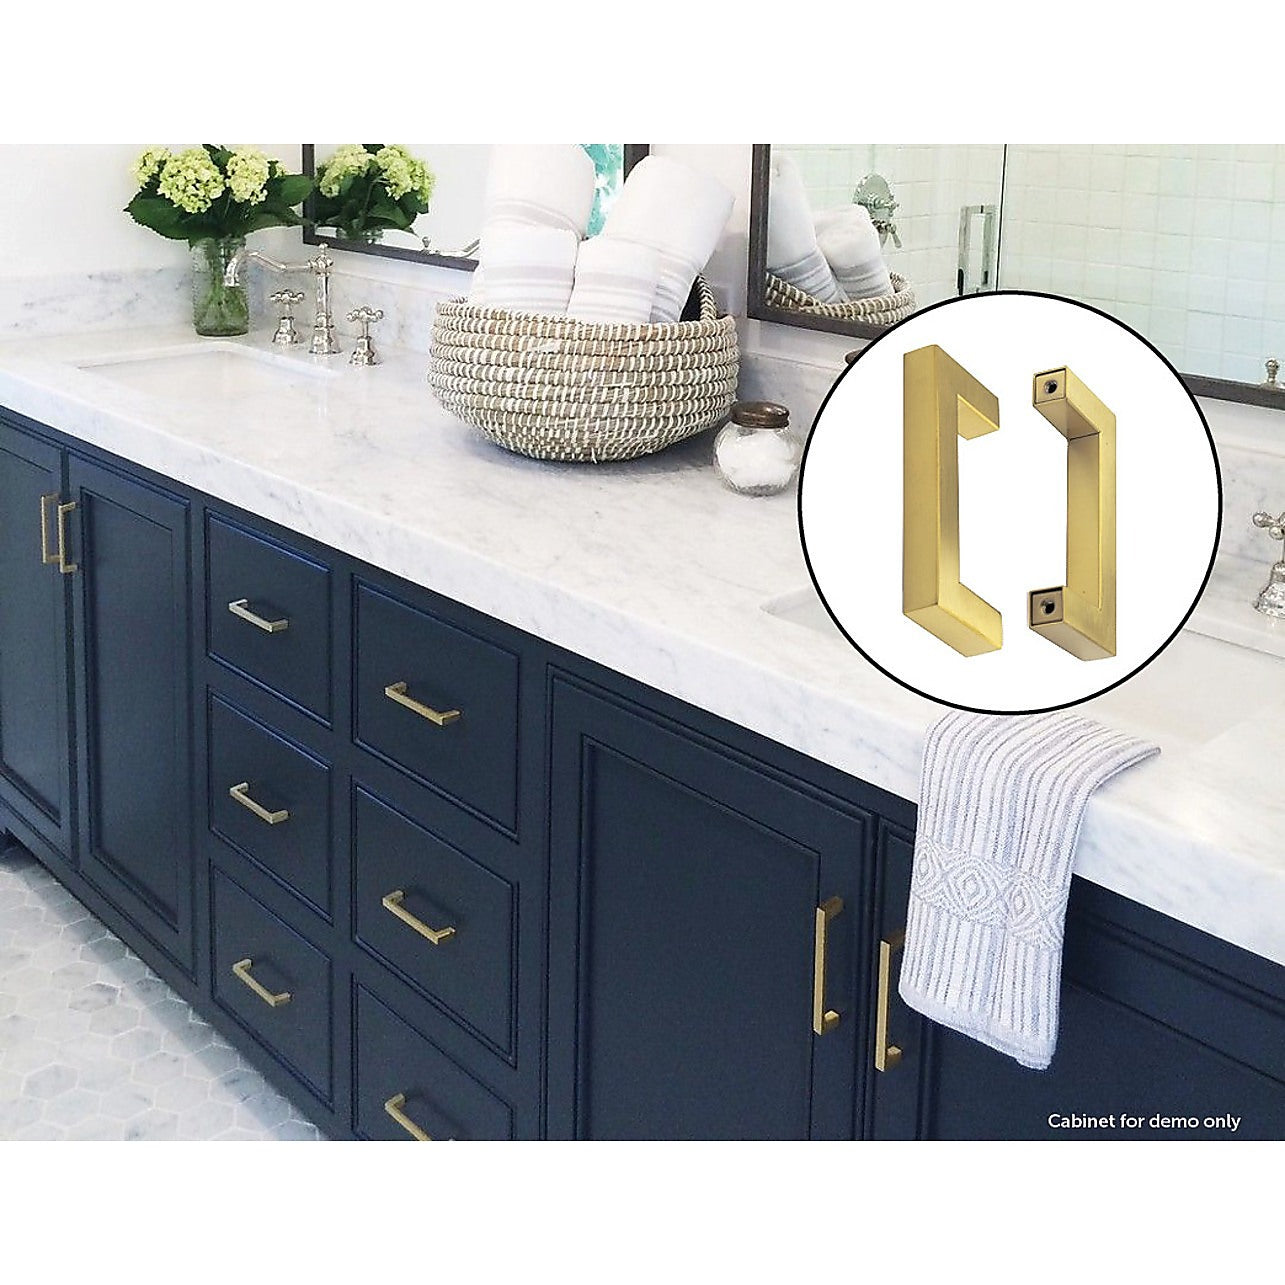 15x Brushed Brass Drawer Pulls Kitchen Cabinet Handles - Gold Finish 96mm -  DIY & Renovation > Kitchen